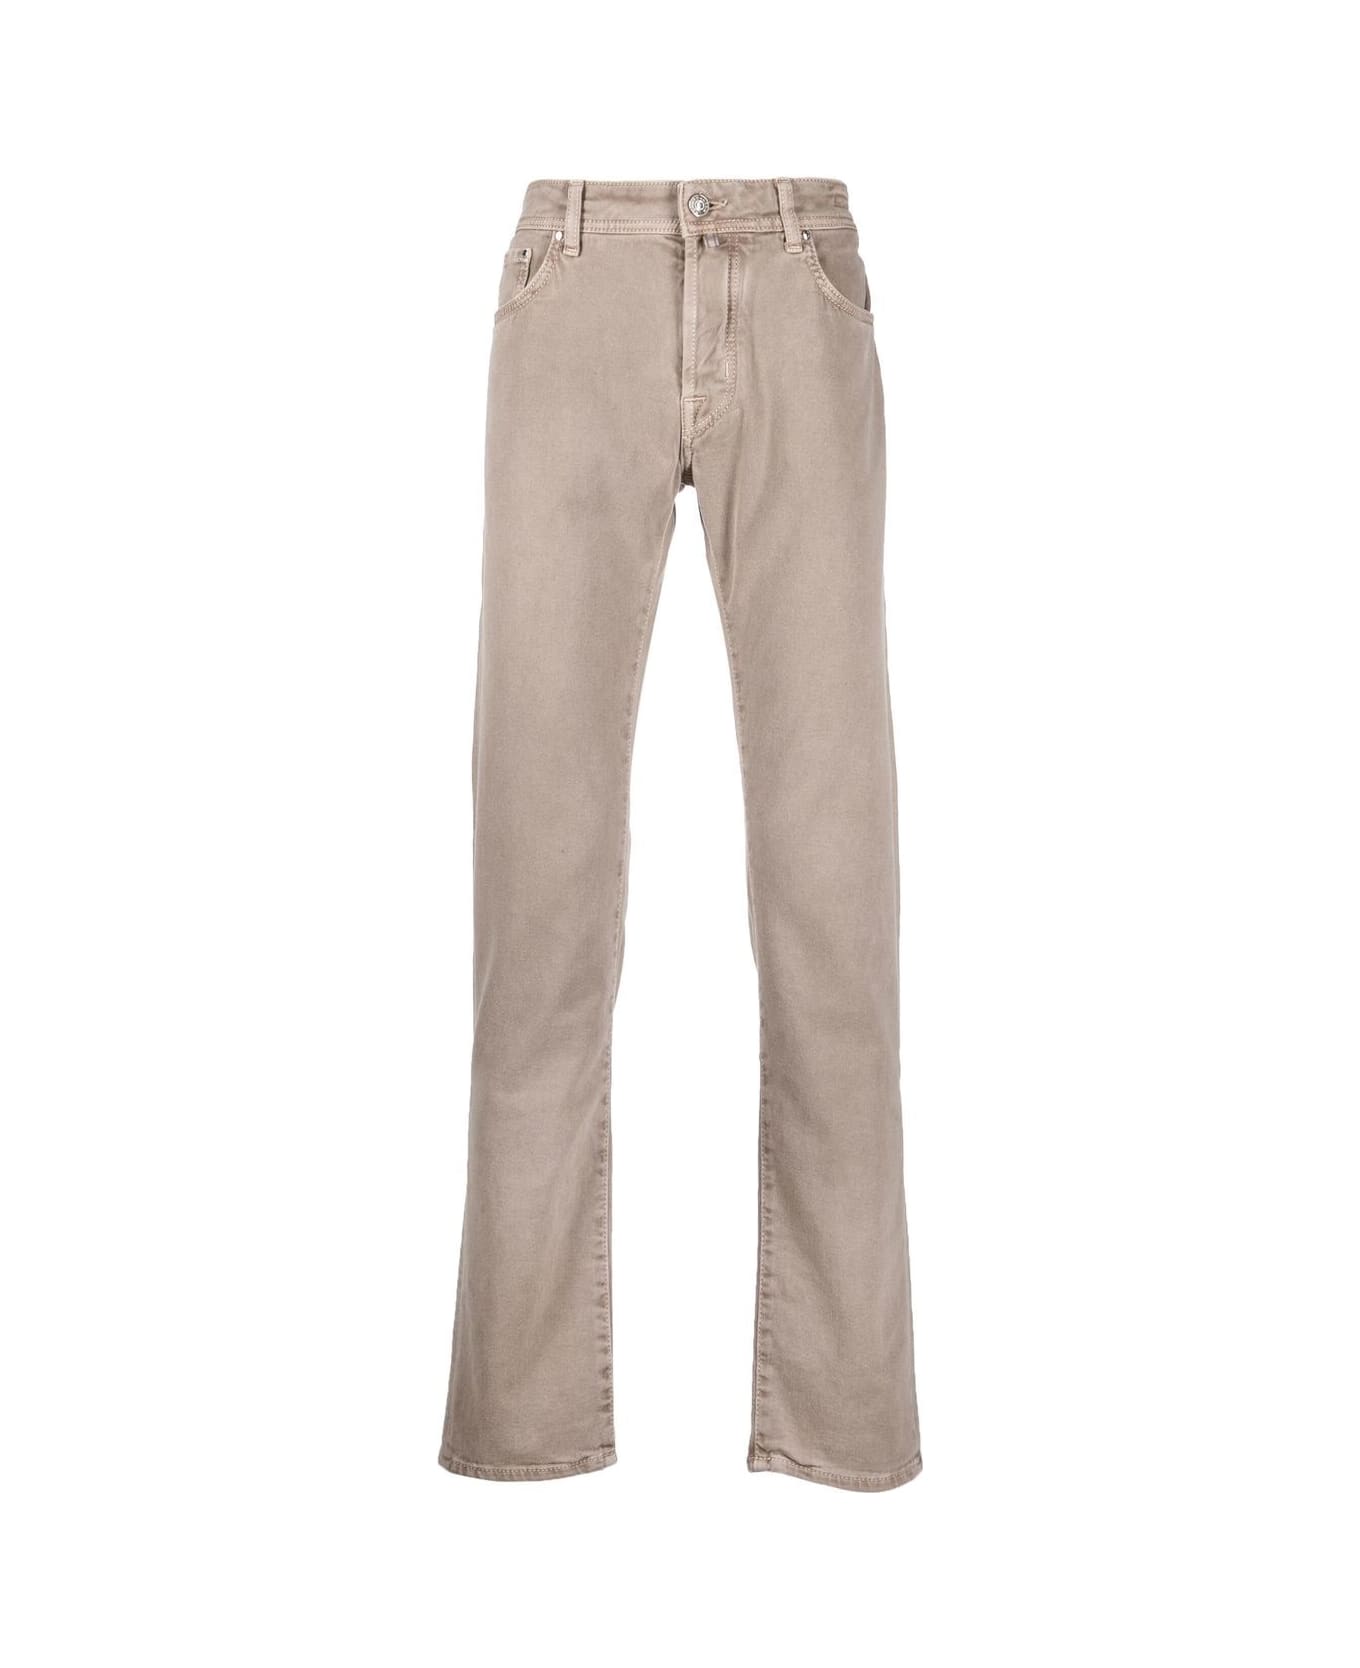 Jacob Cohen Bard Slim Fit Jeans - Elephant Grey